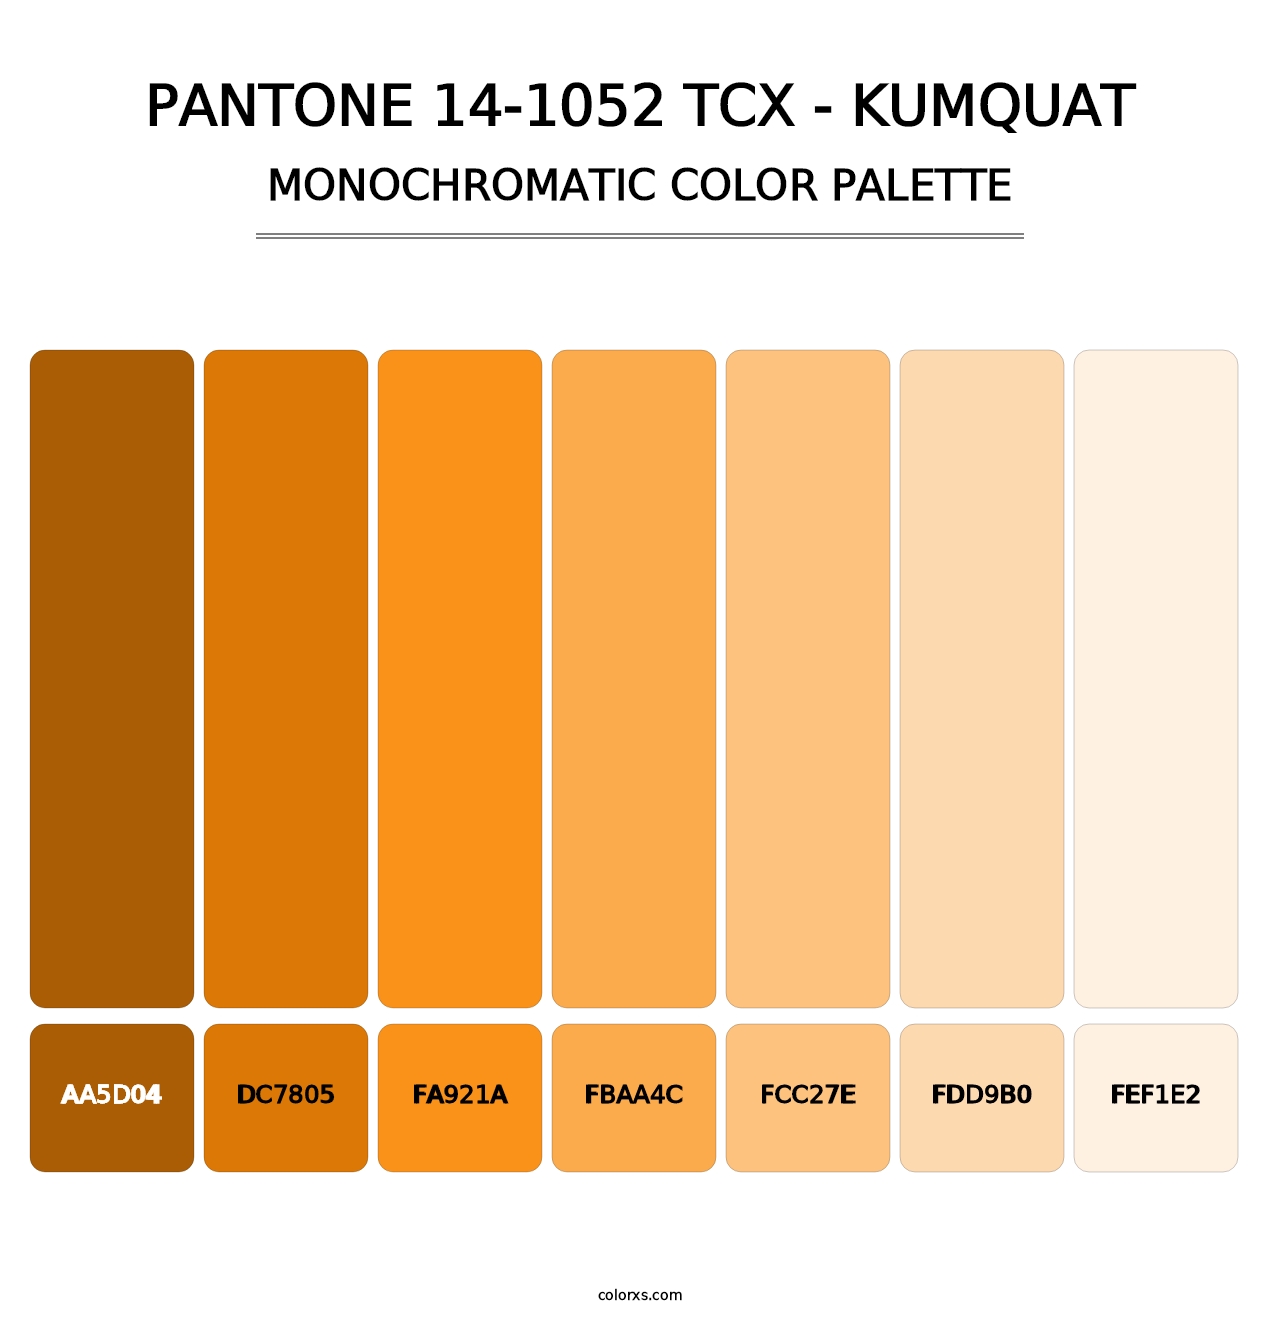 PANTONE 14-1052 TCX - Kumquat - Monochromatic Color Palette